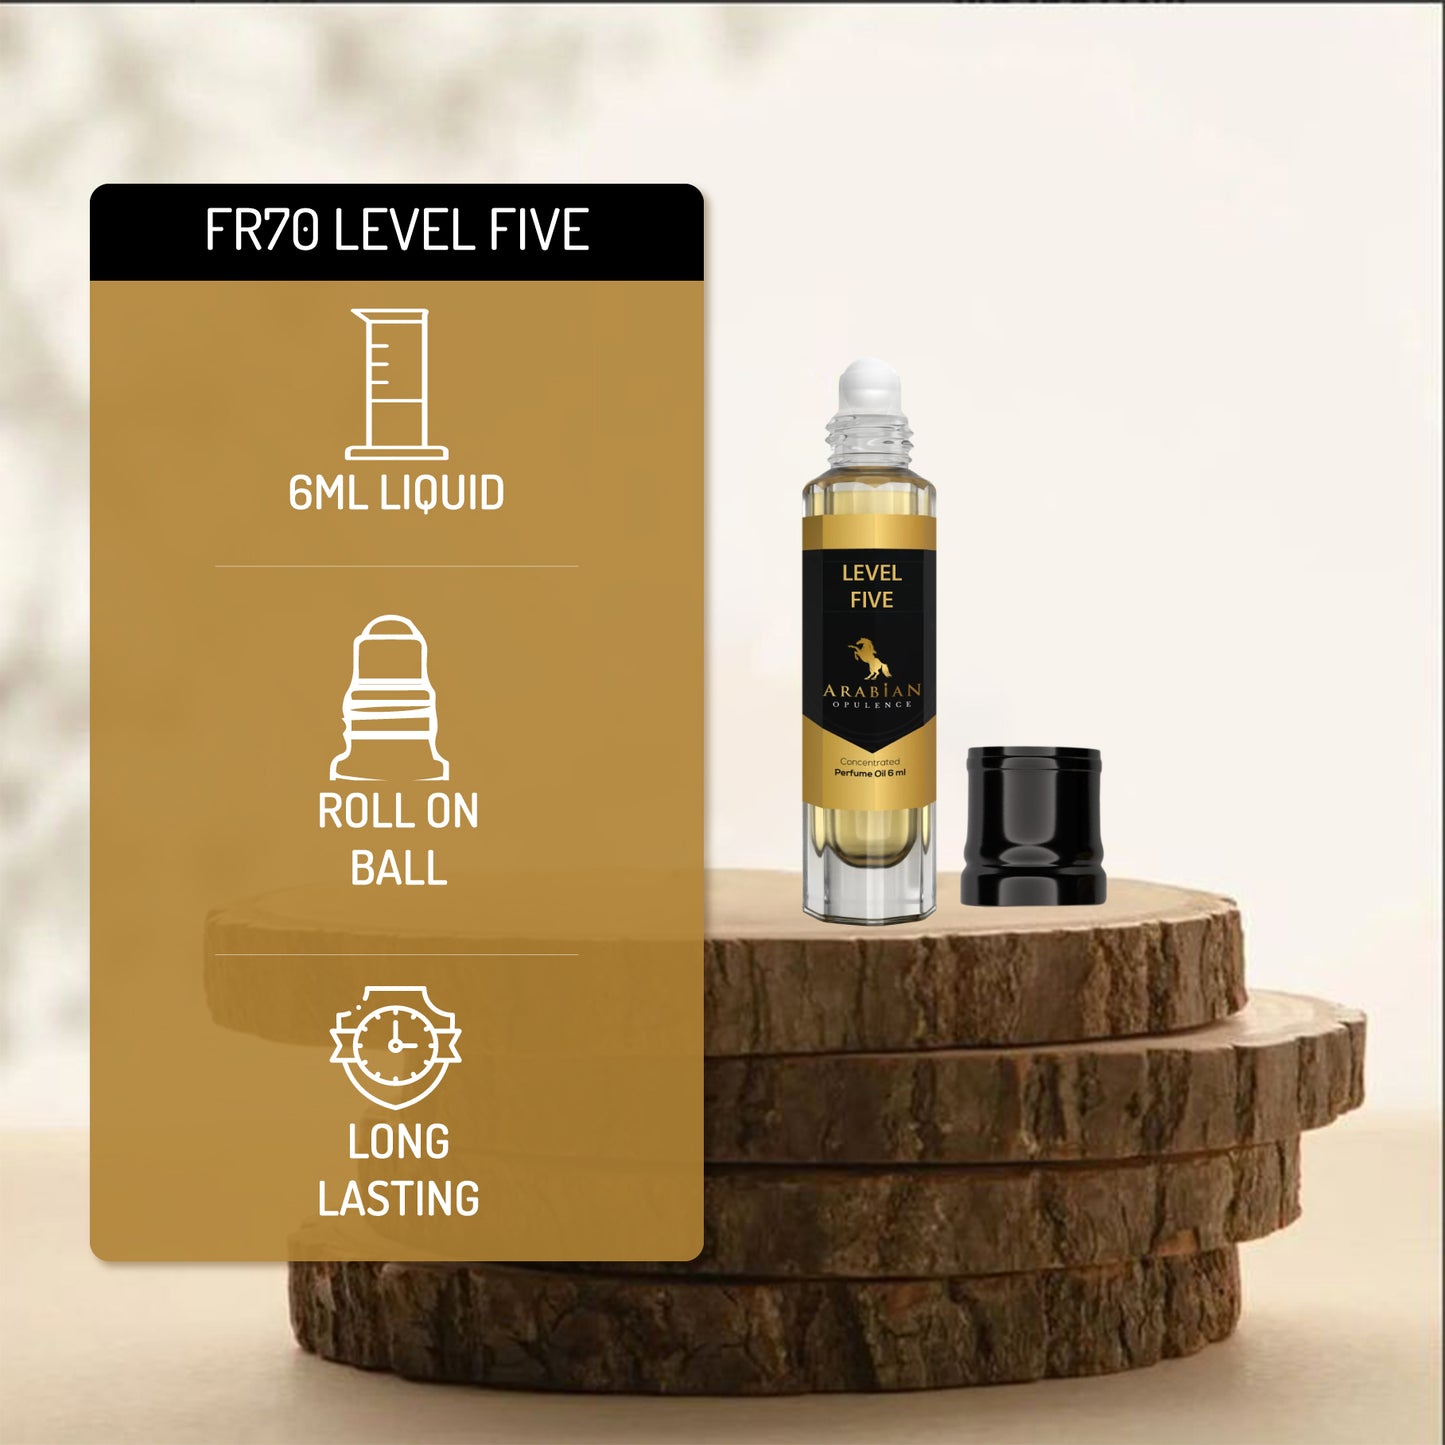 FR70 LEVEL 5 W  - Perfume Body Oil - Alcohol Free